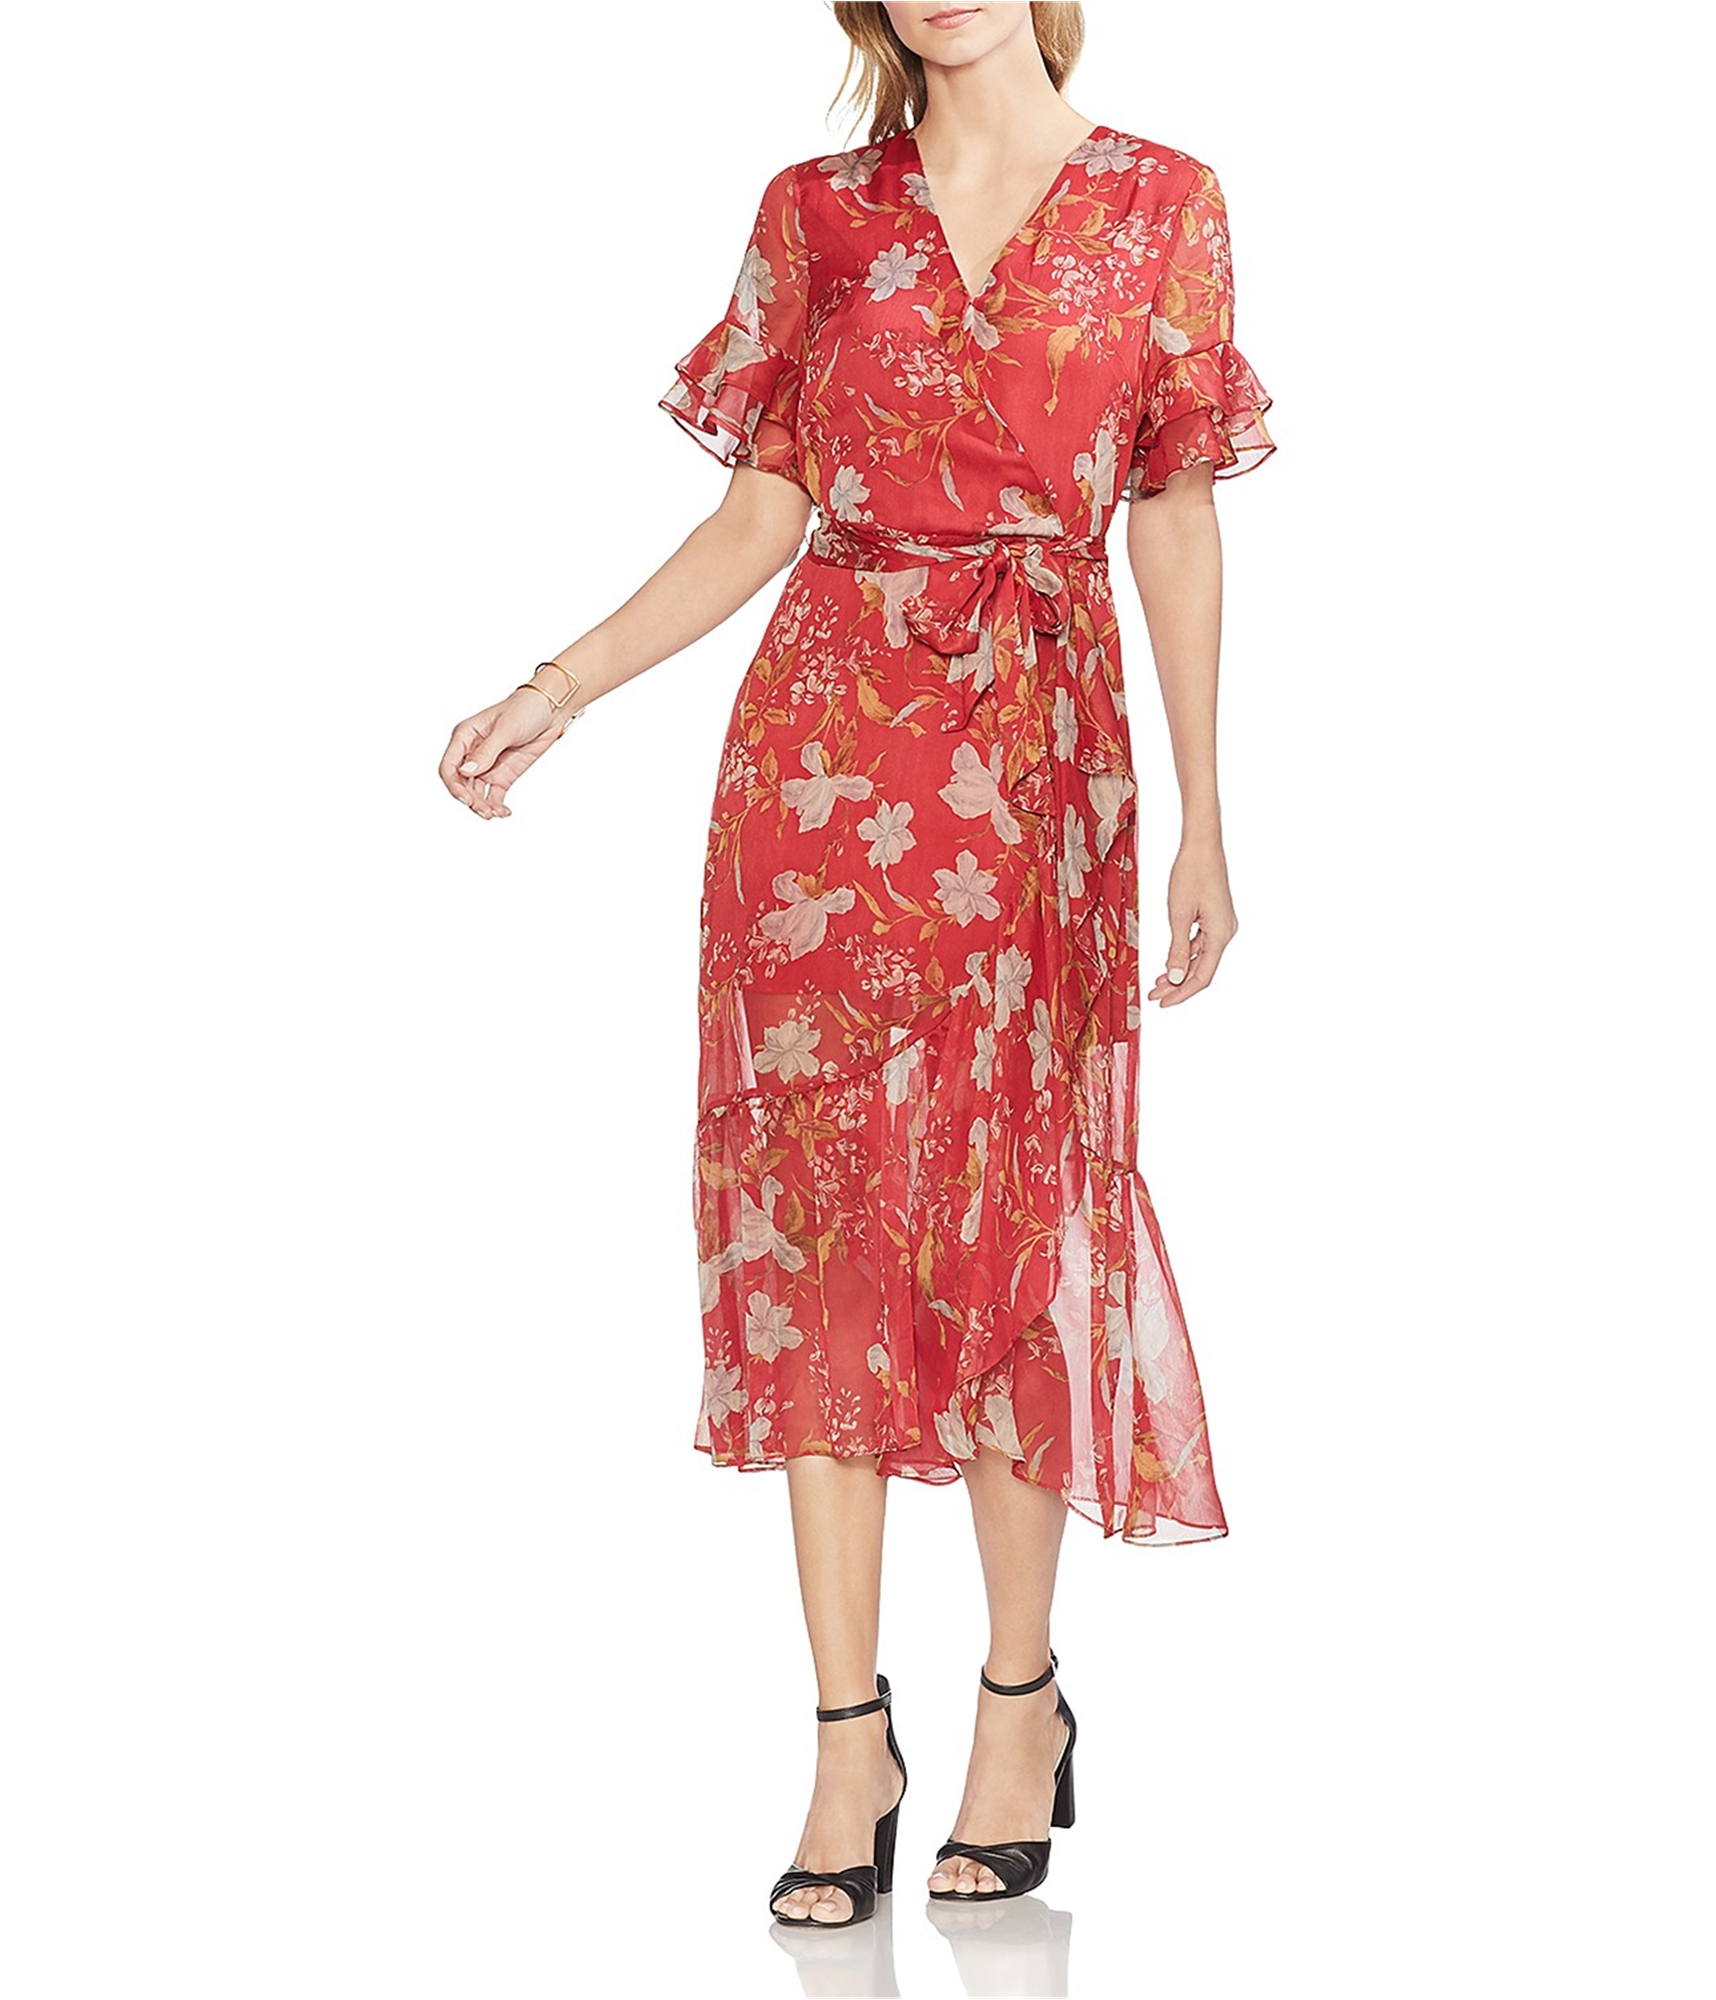 Vince Camuto Womens Wildflower Ruffled Dress, Red, 6 | eBay